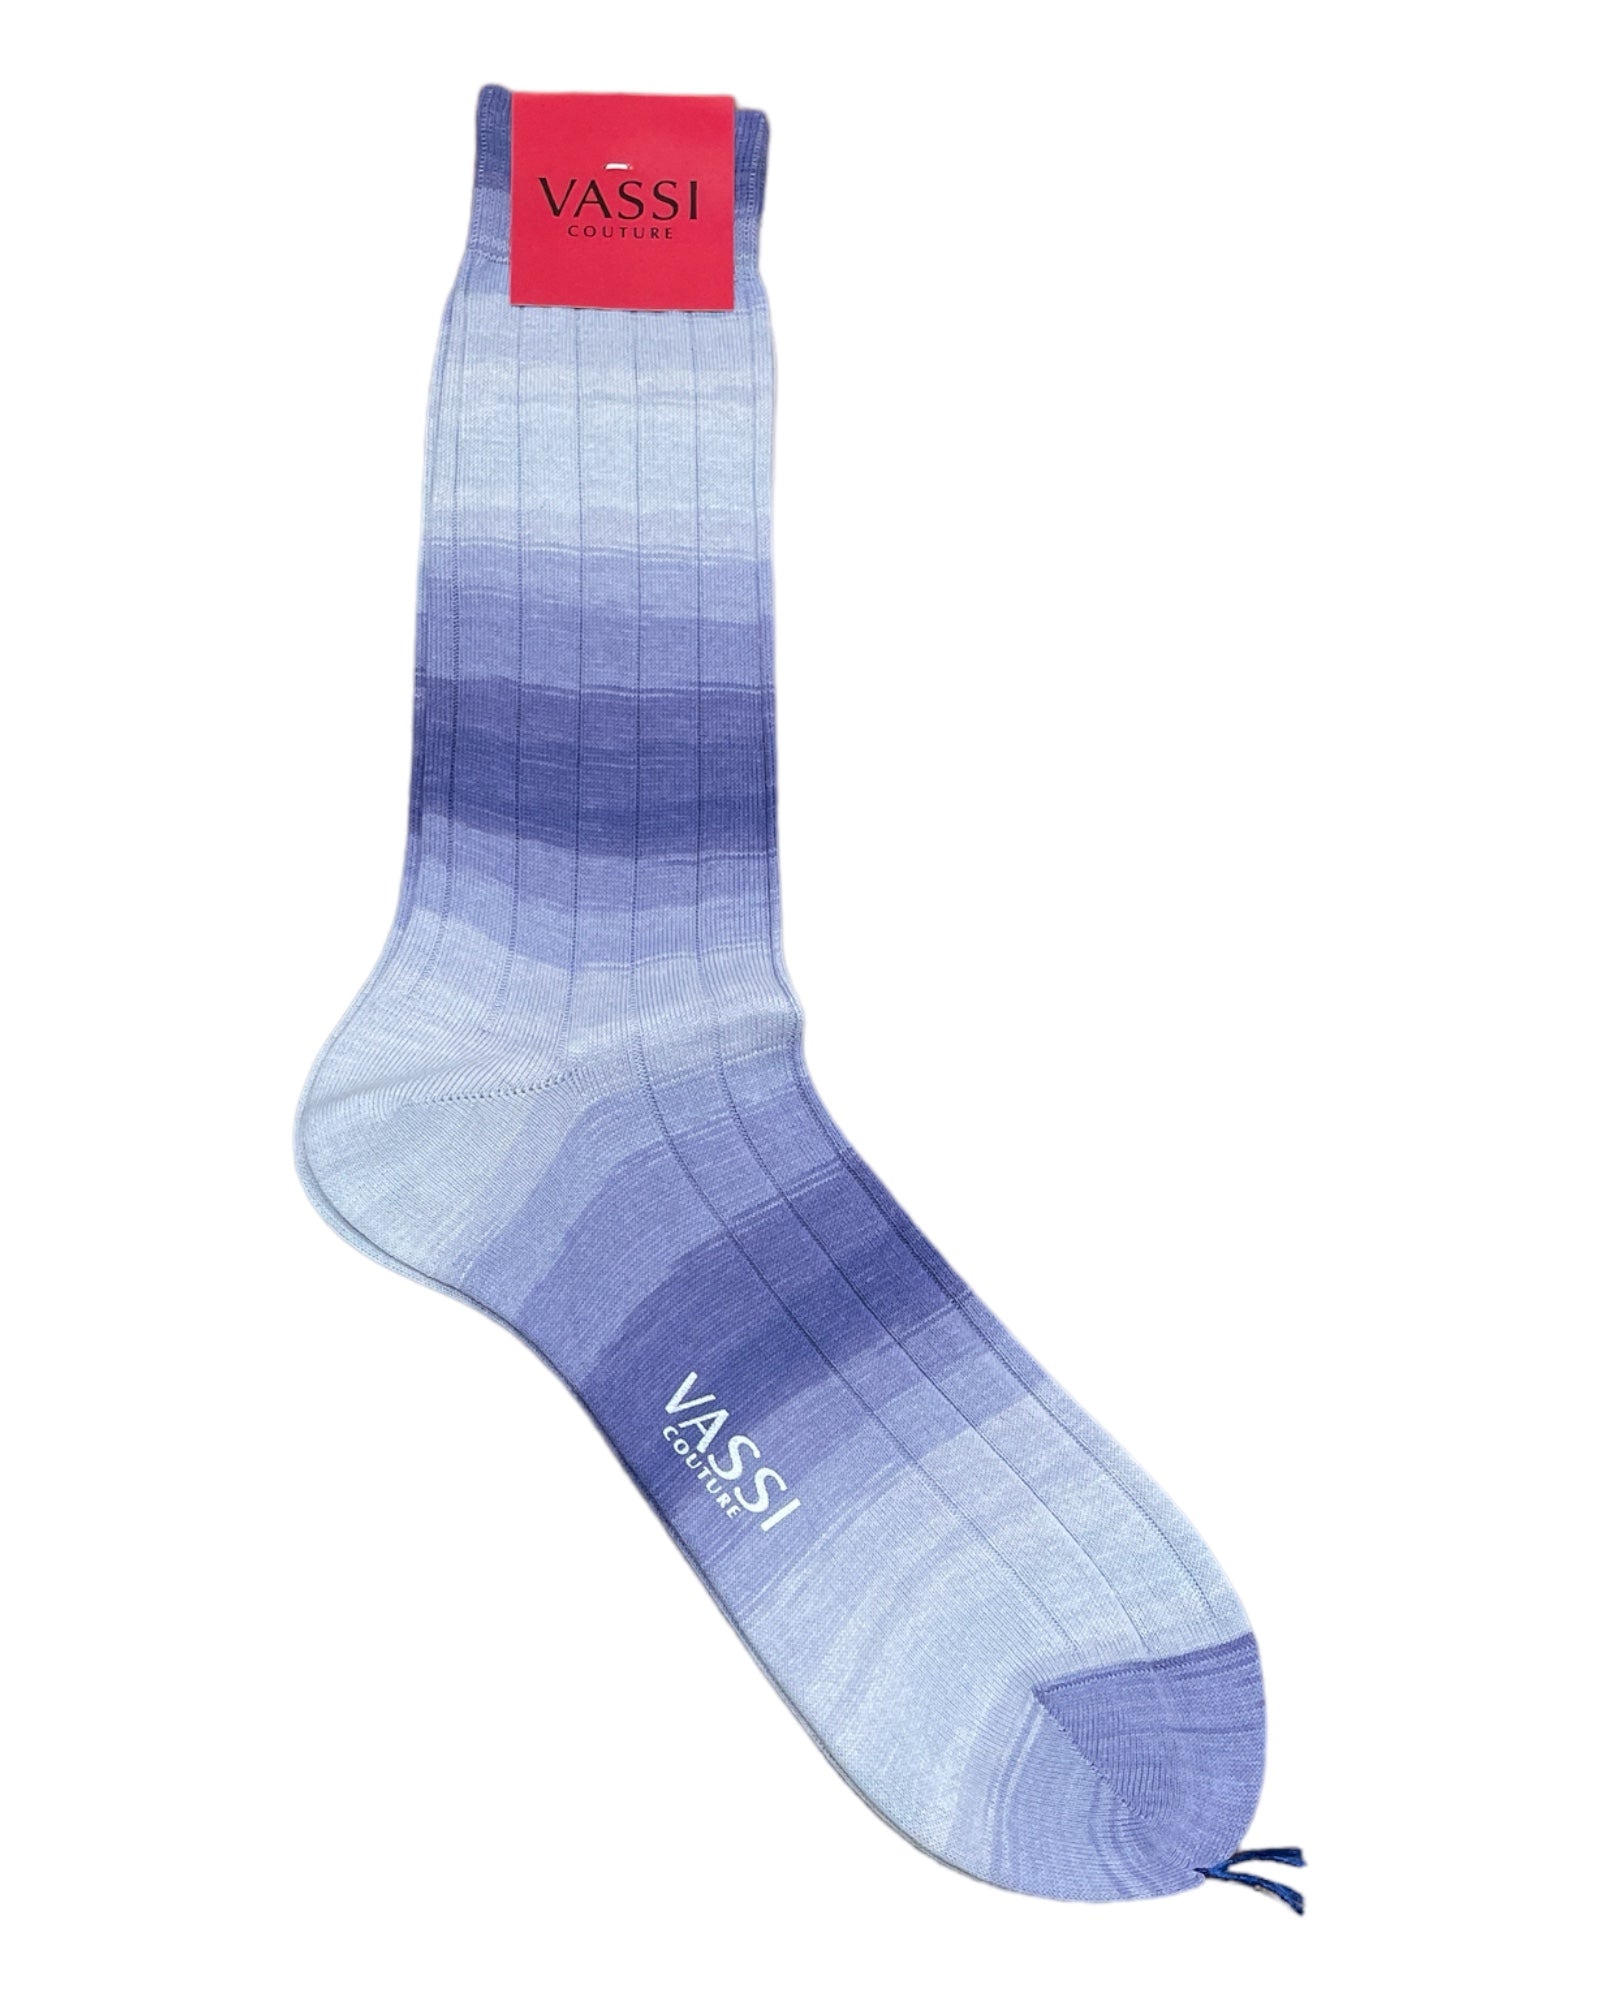 Extra-fine Multicolor Shadow Striped Cotton Socks SocksLavender